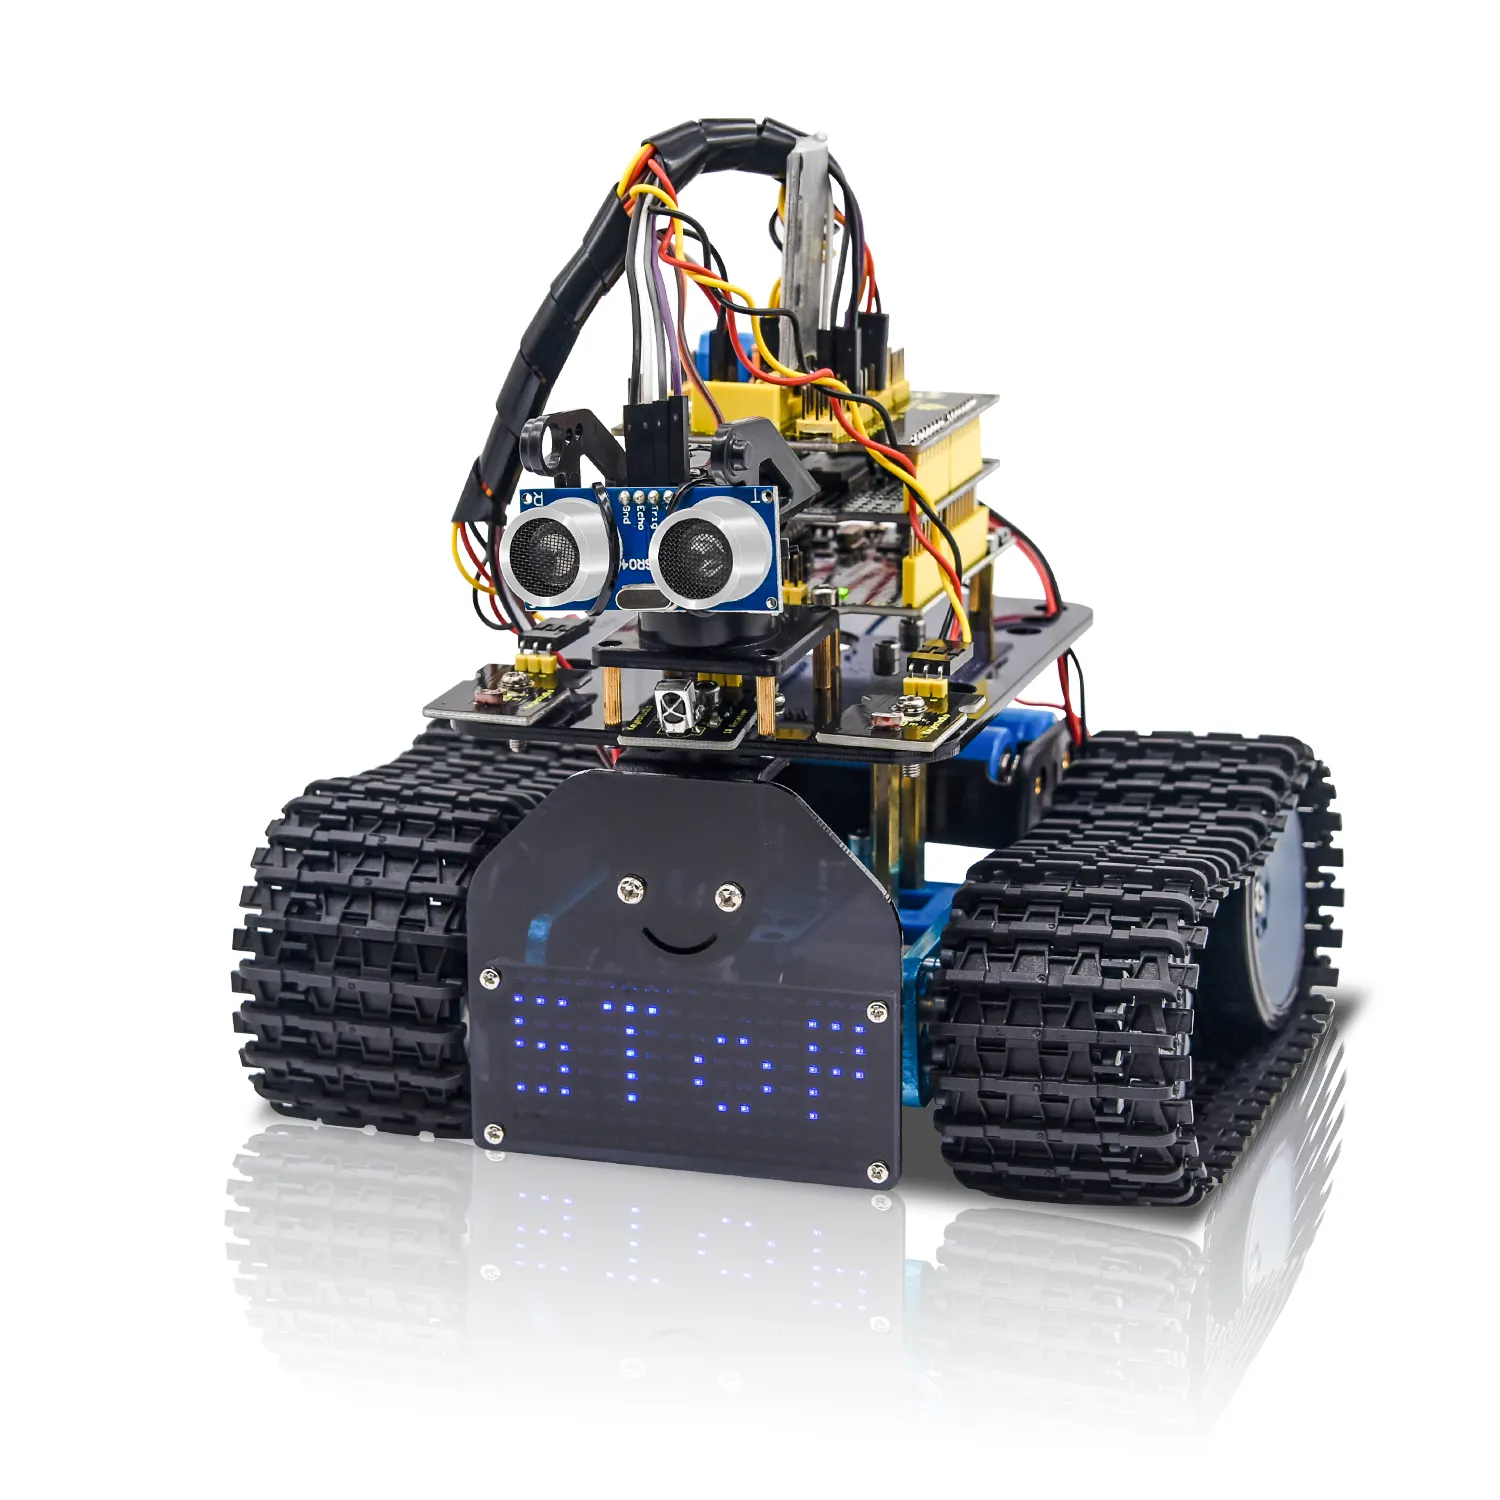 OEM Keyestudio DIY מיני טנק V2.0 חכם BT רובוט רכב ערכת גזע רובוט ערכת עבור Arduino